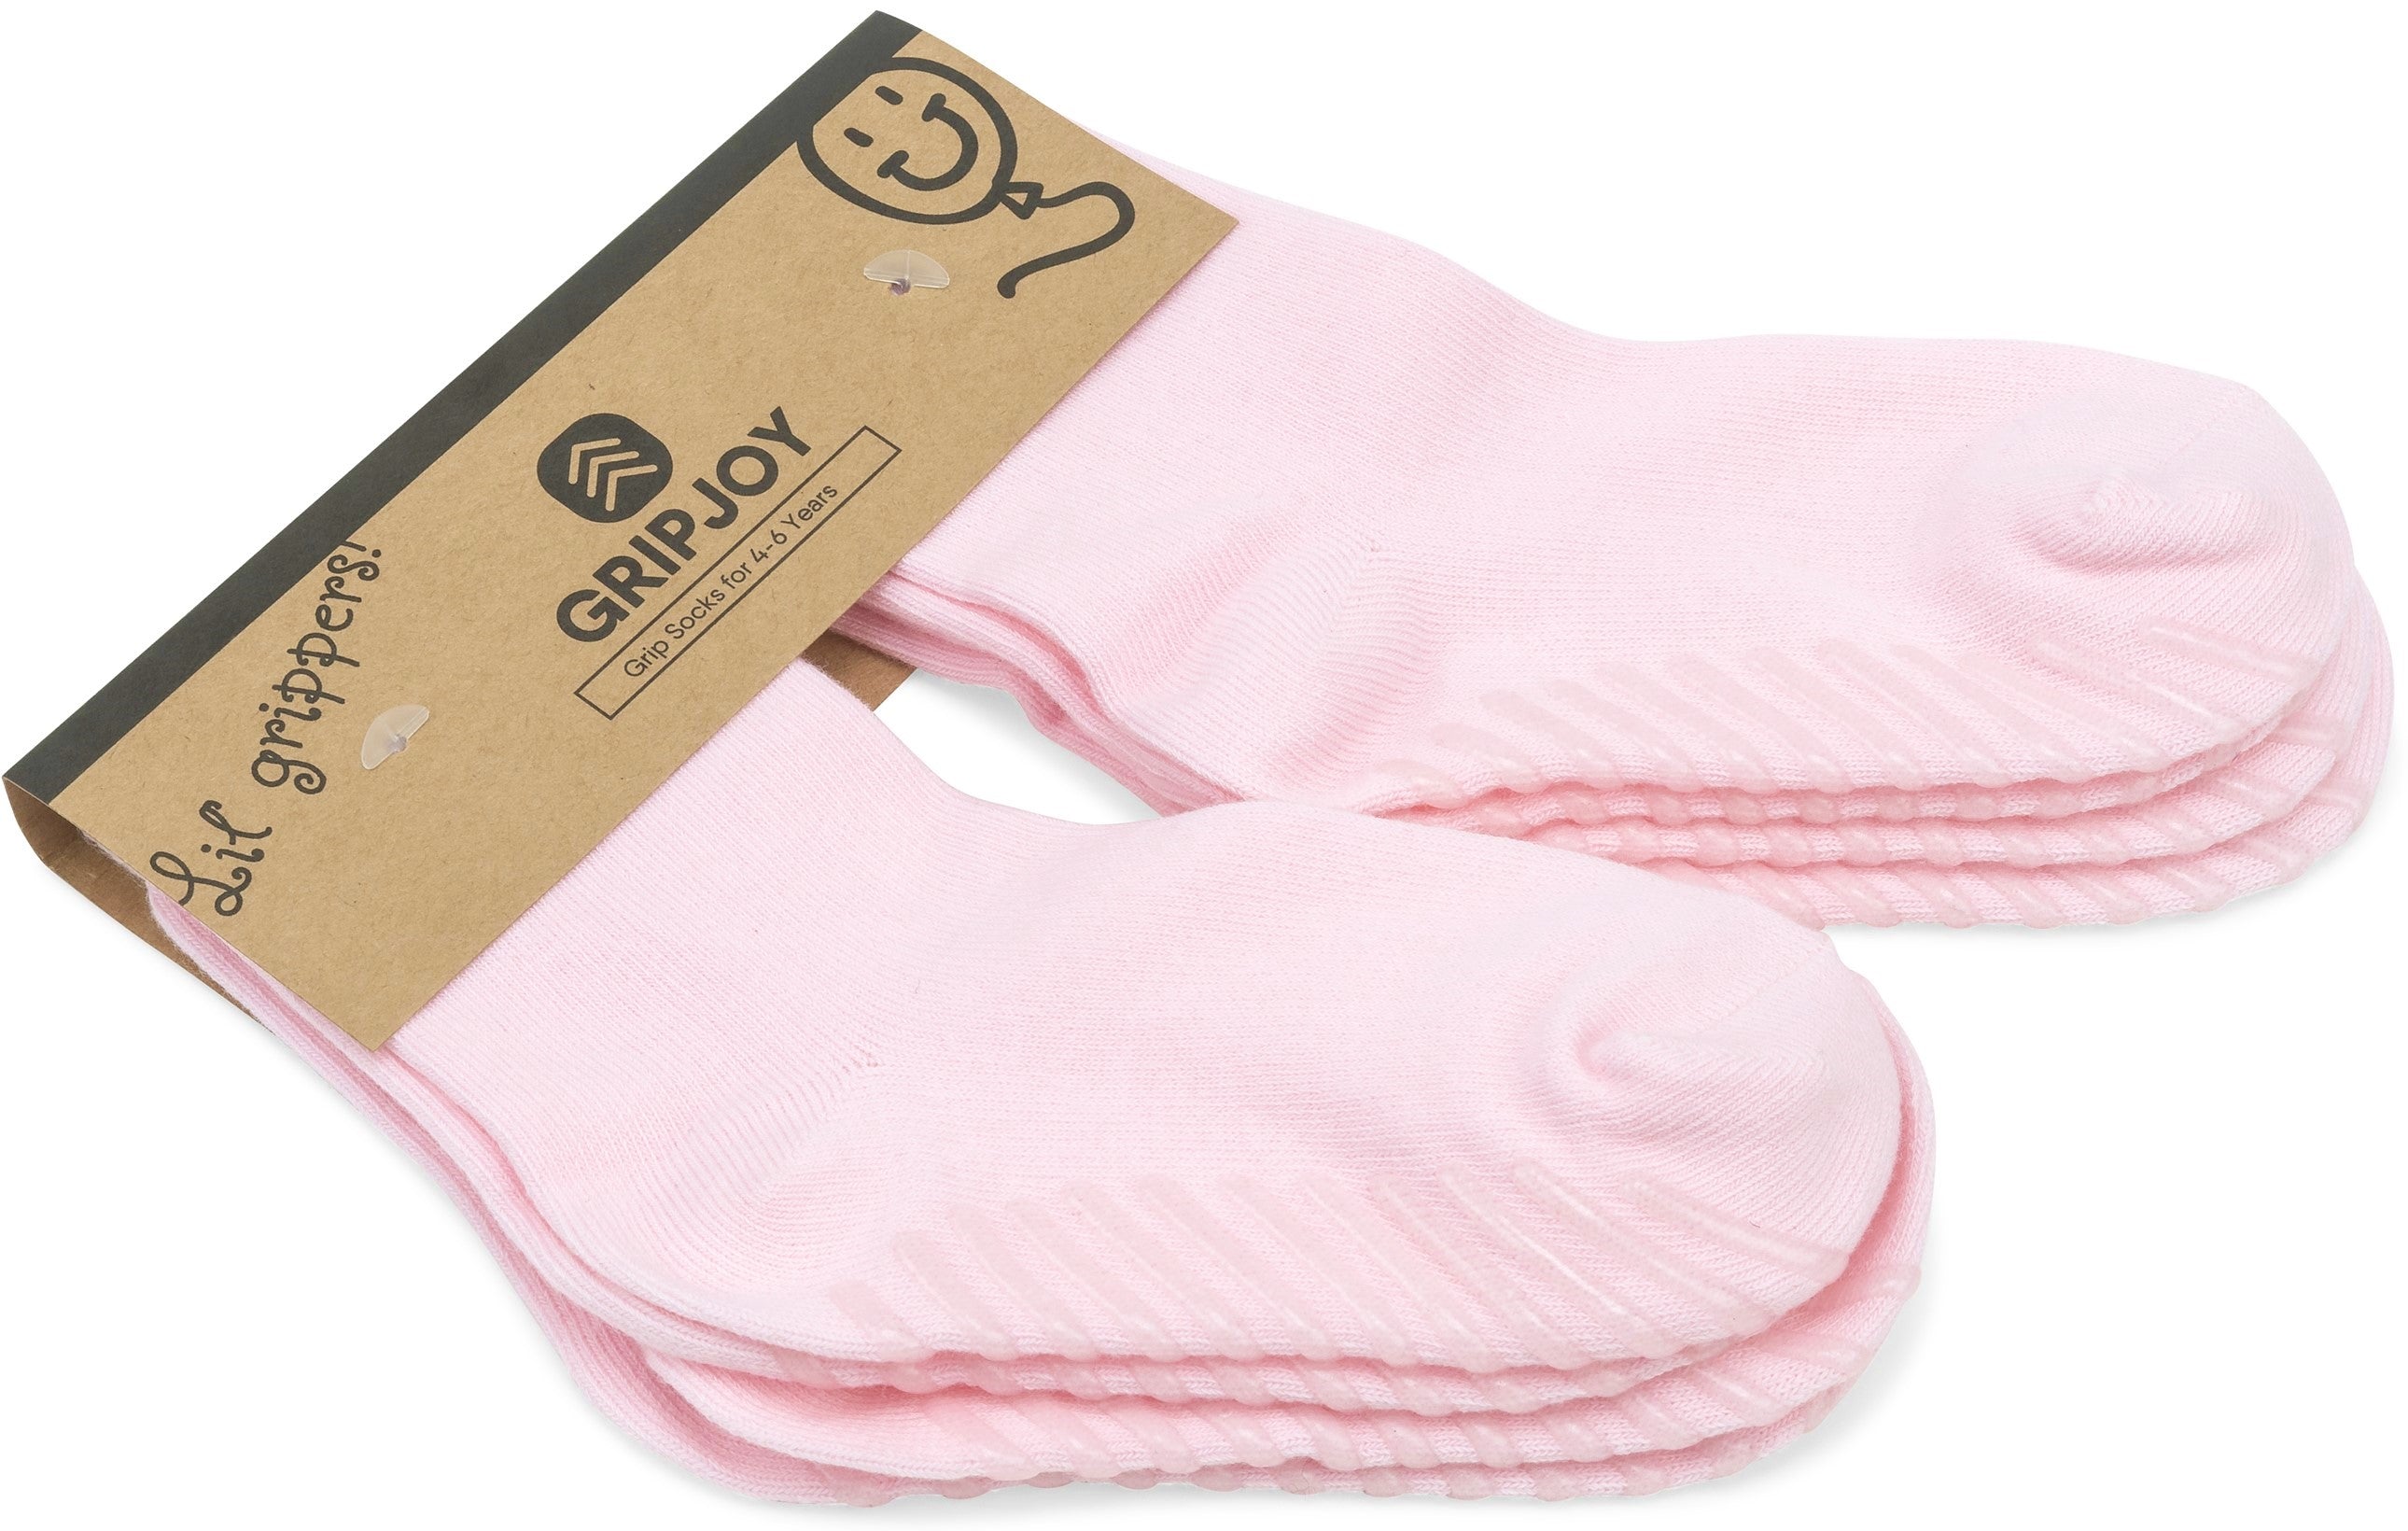 Gripjoy Socks Grip Socks for Toddlers & Kids - 2 Pack - Blue 2-4Y